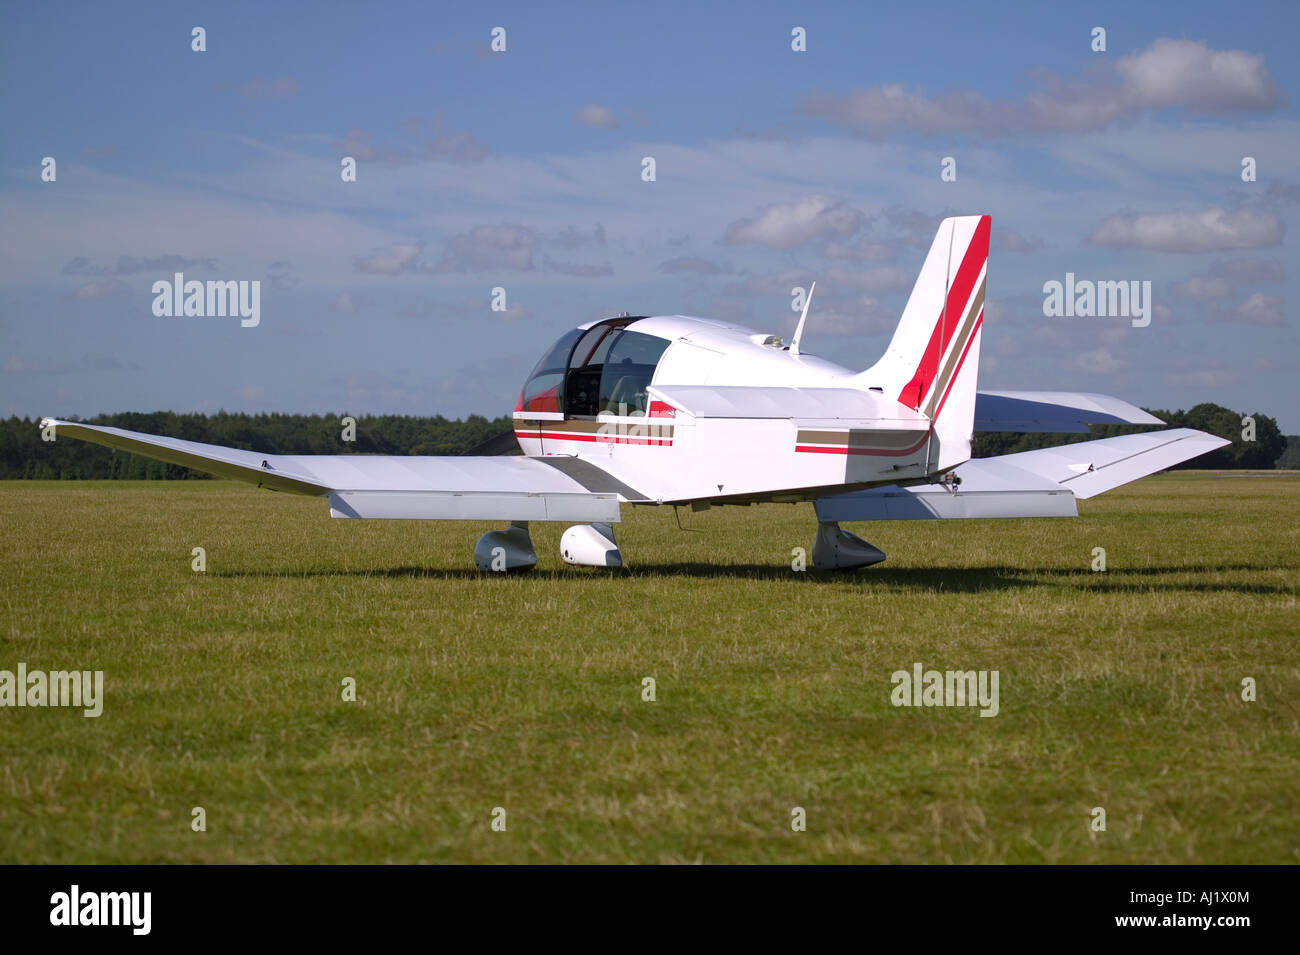 White light aircraft on a grass runway Stock Photo